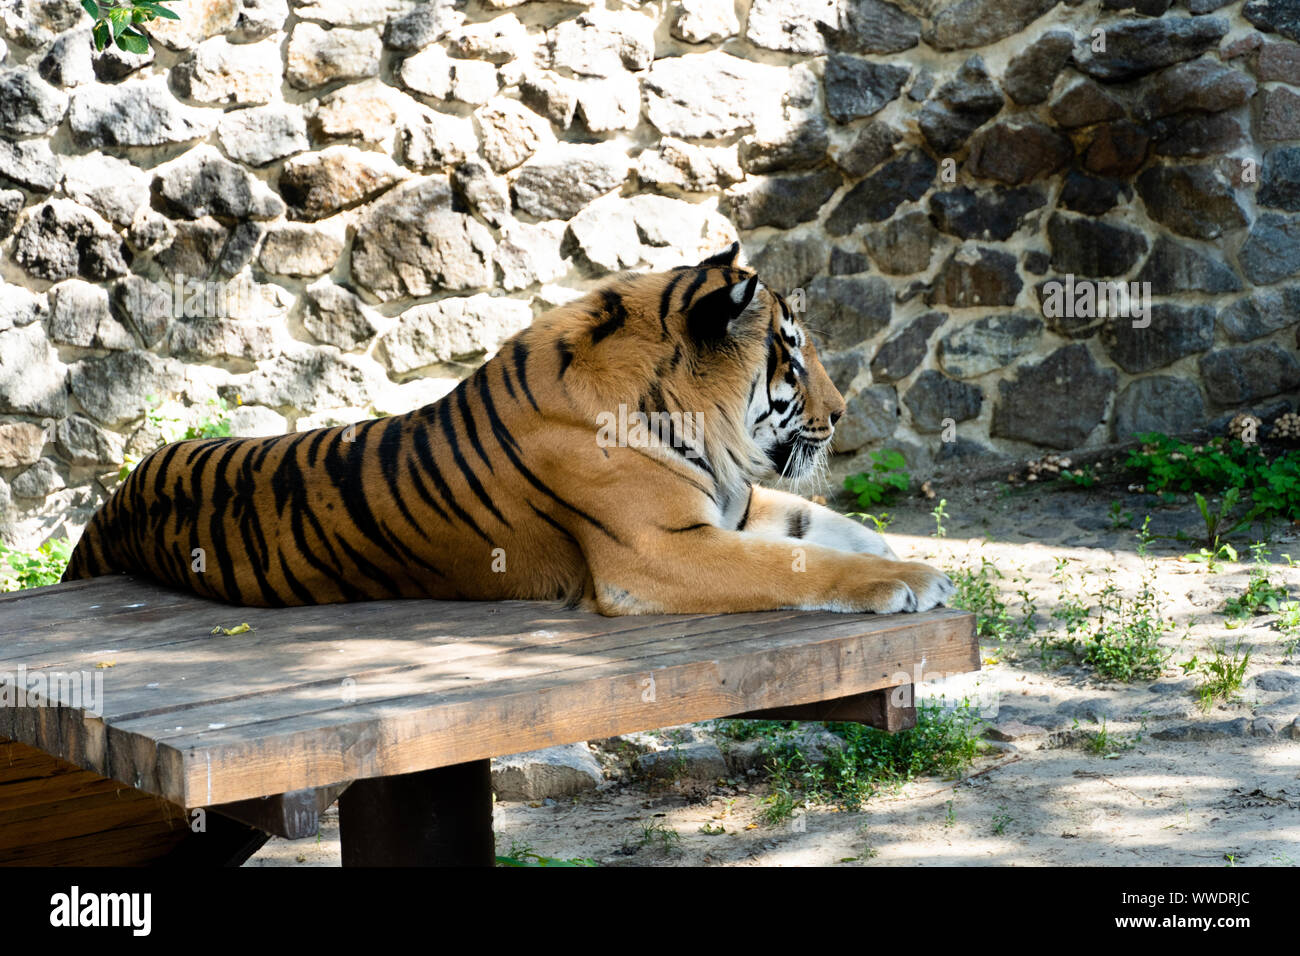 Panthera tigris altaica, also known as the Amur tiger. Stock Photo